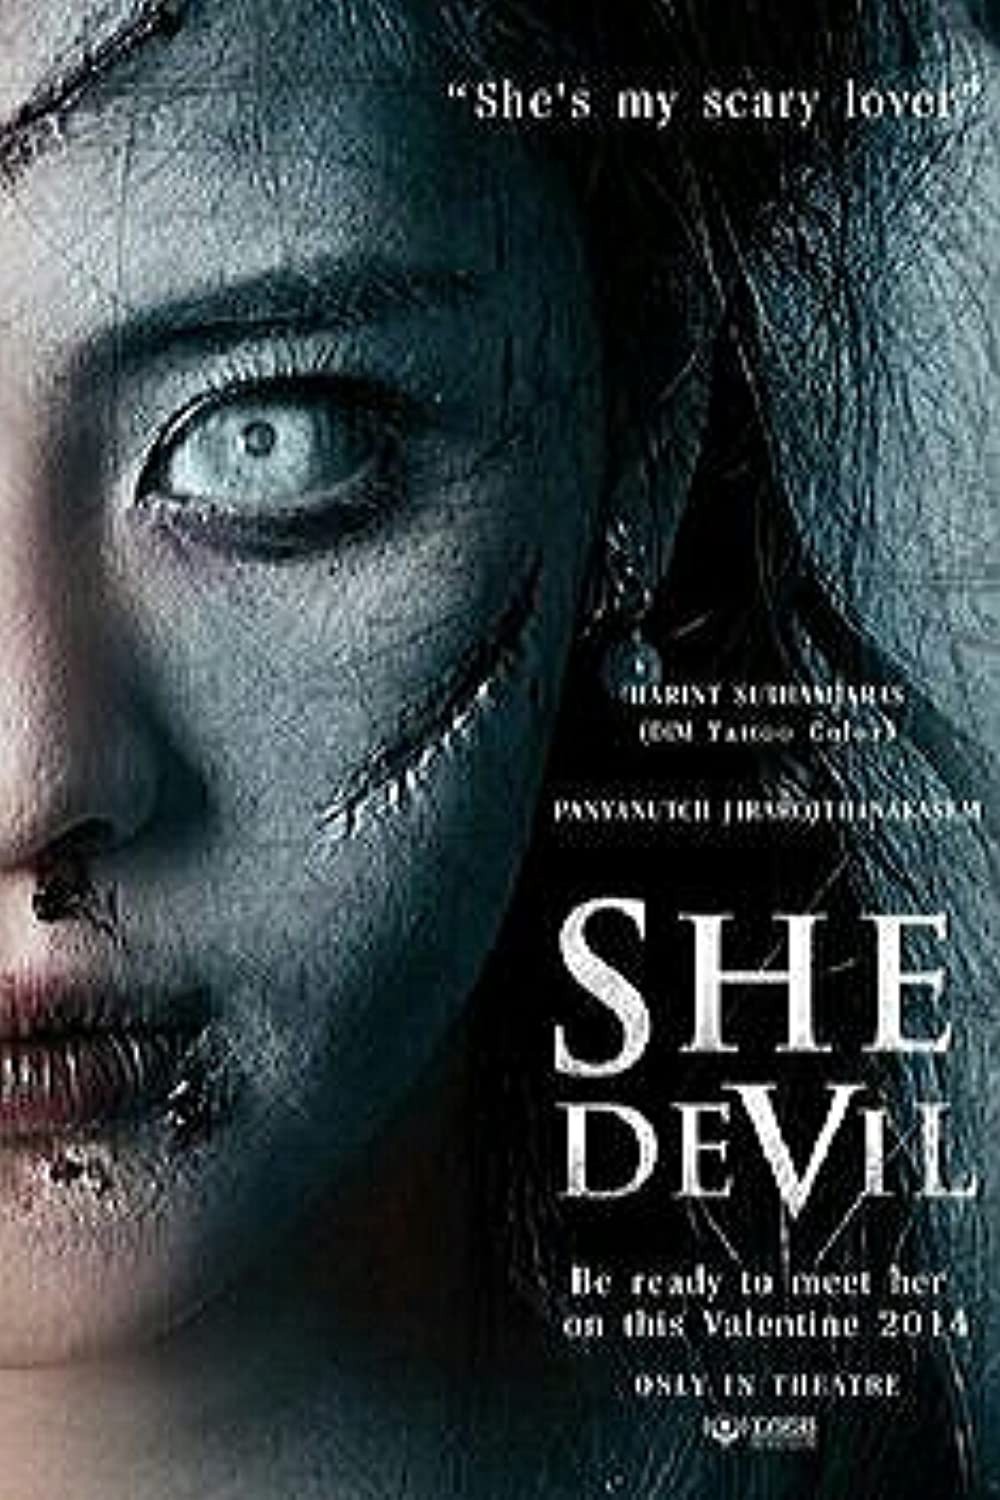 Vợ Quỷ - She Devil 2014 (2014)